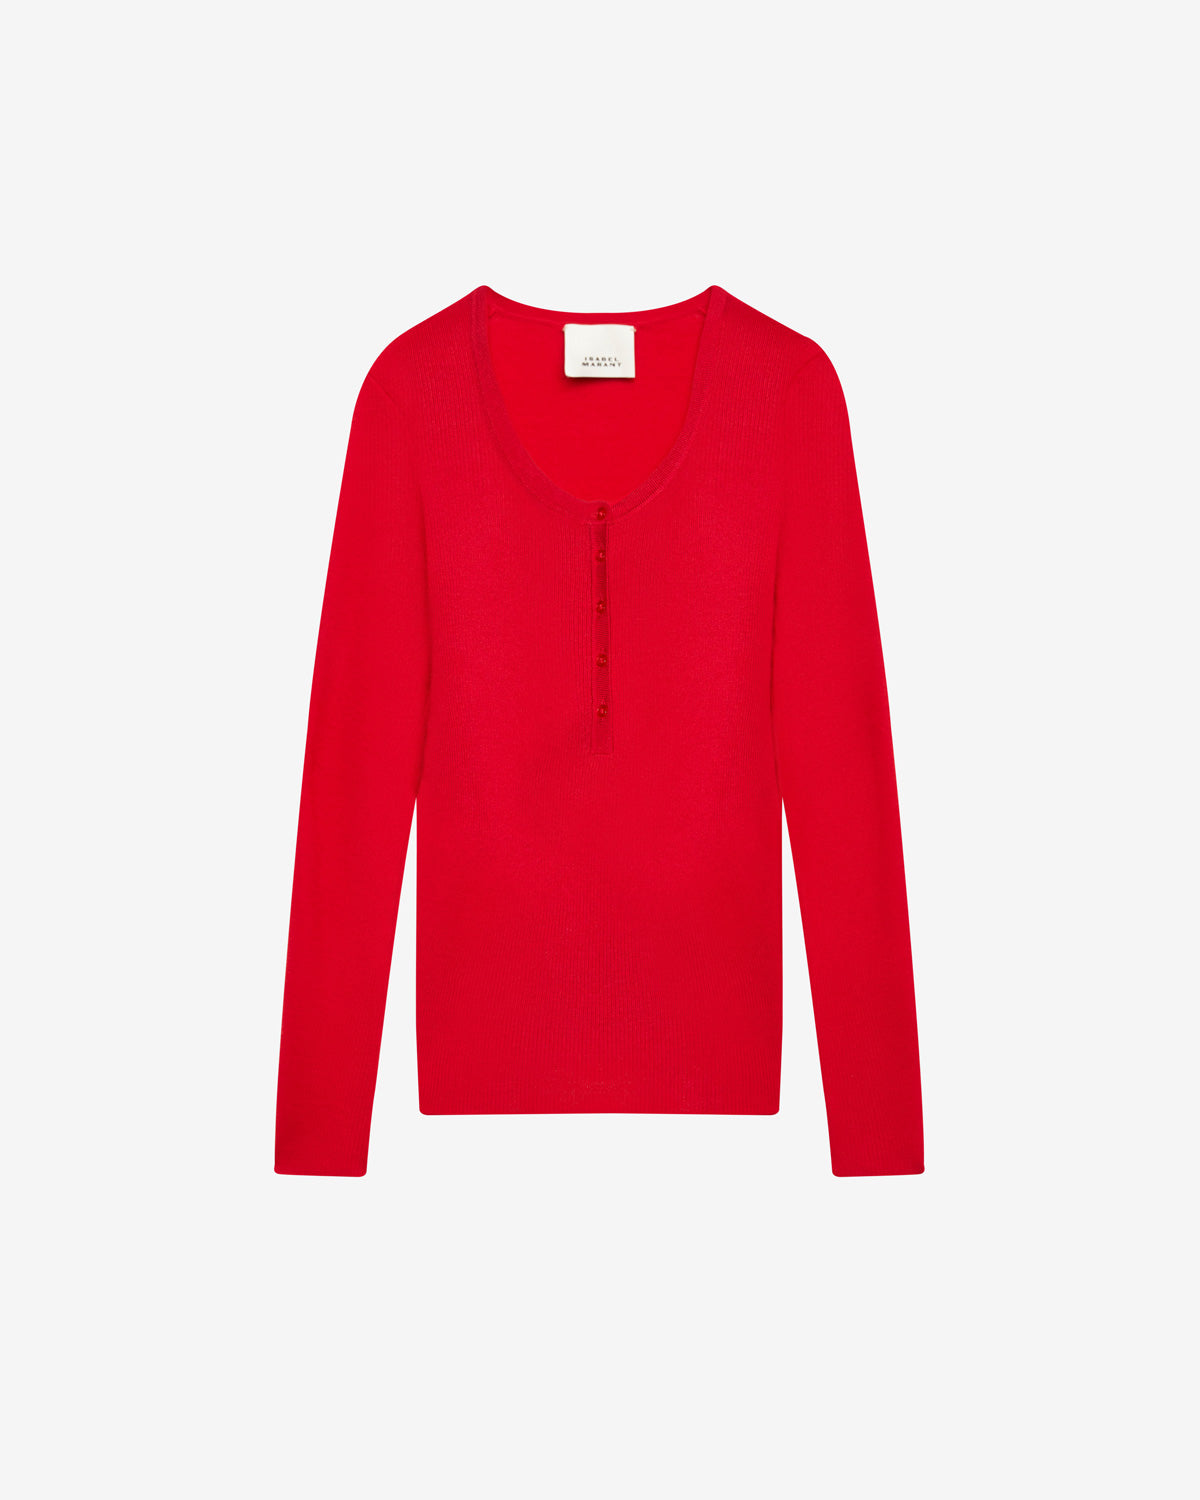 Pullover estine Woman Poppy red 1